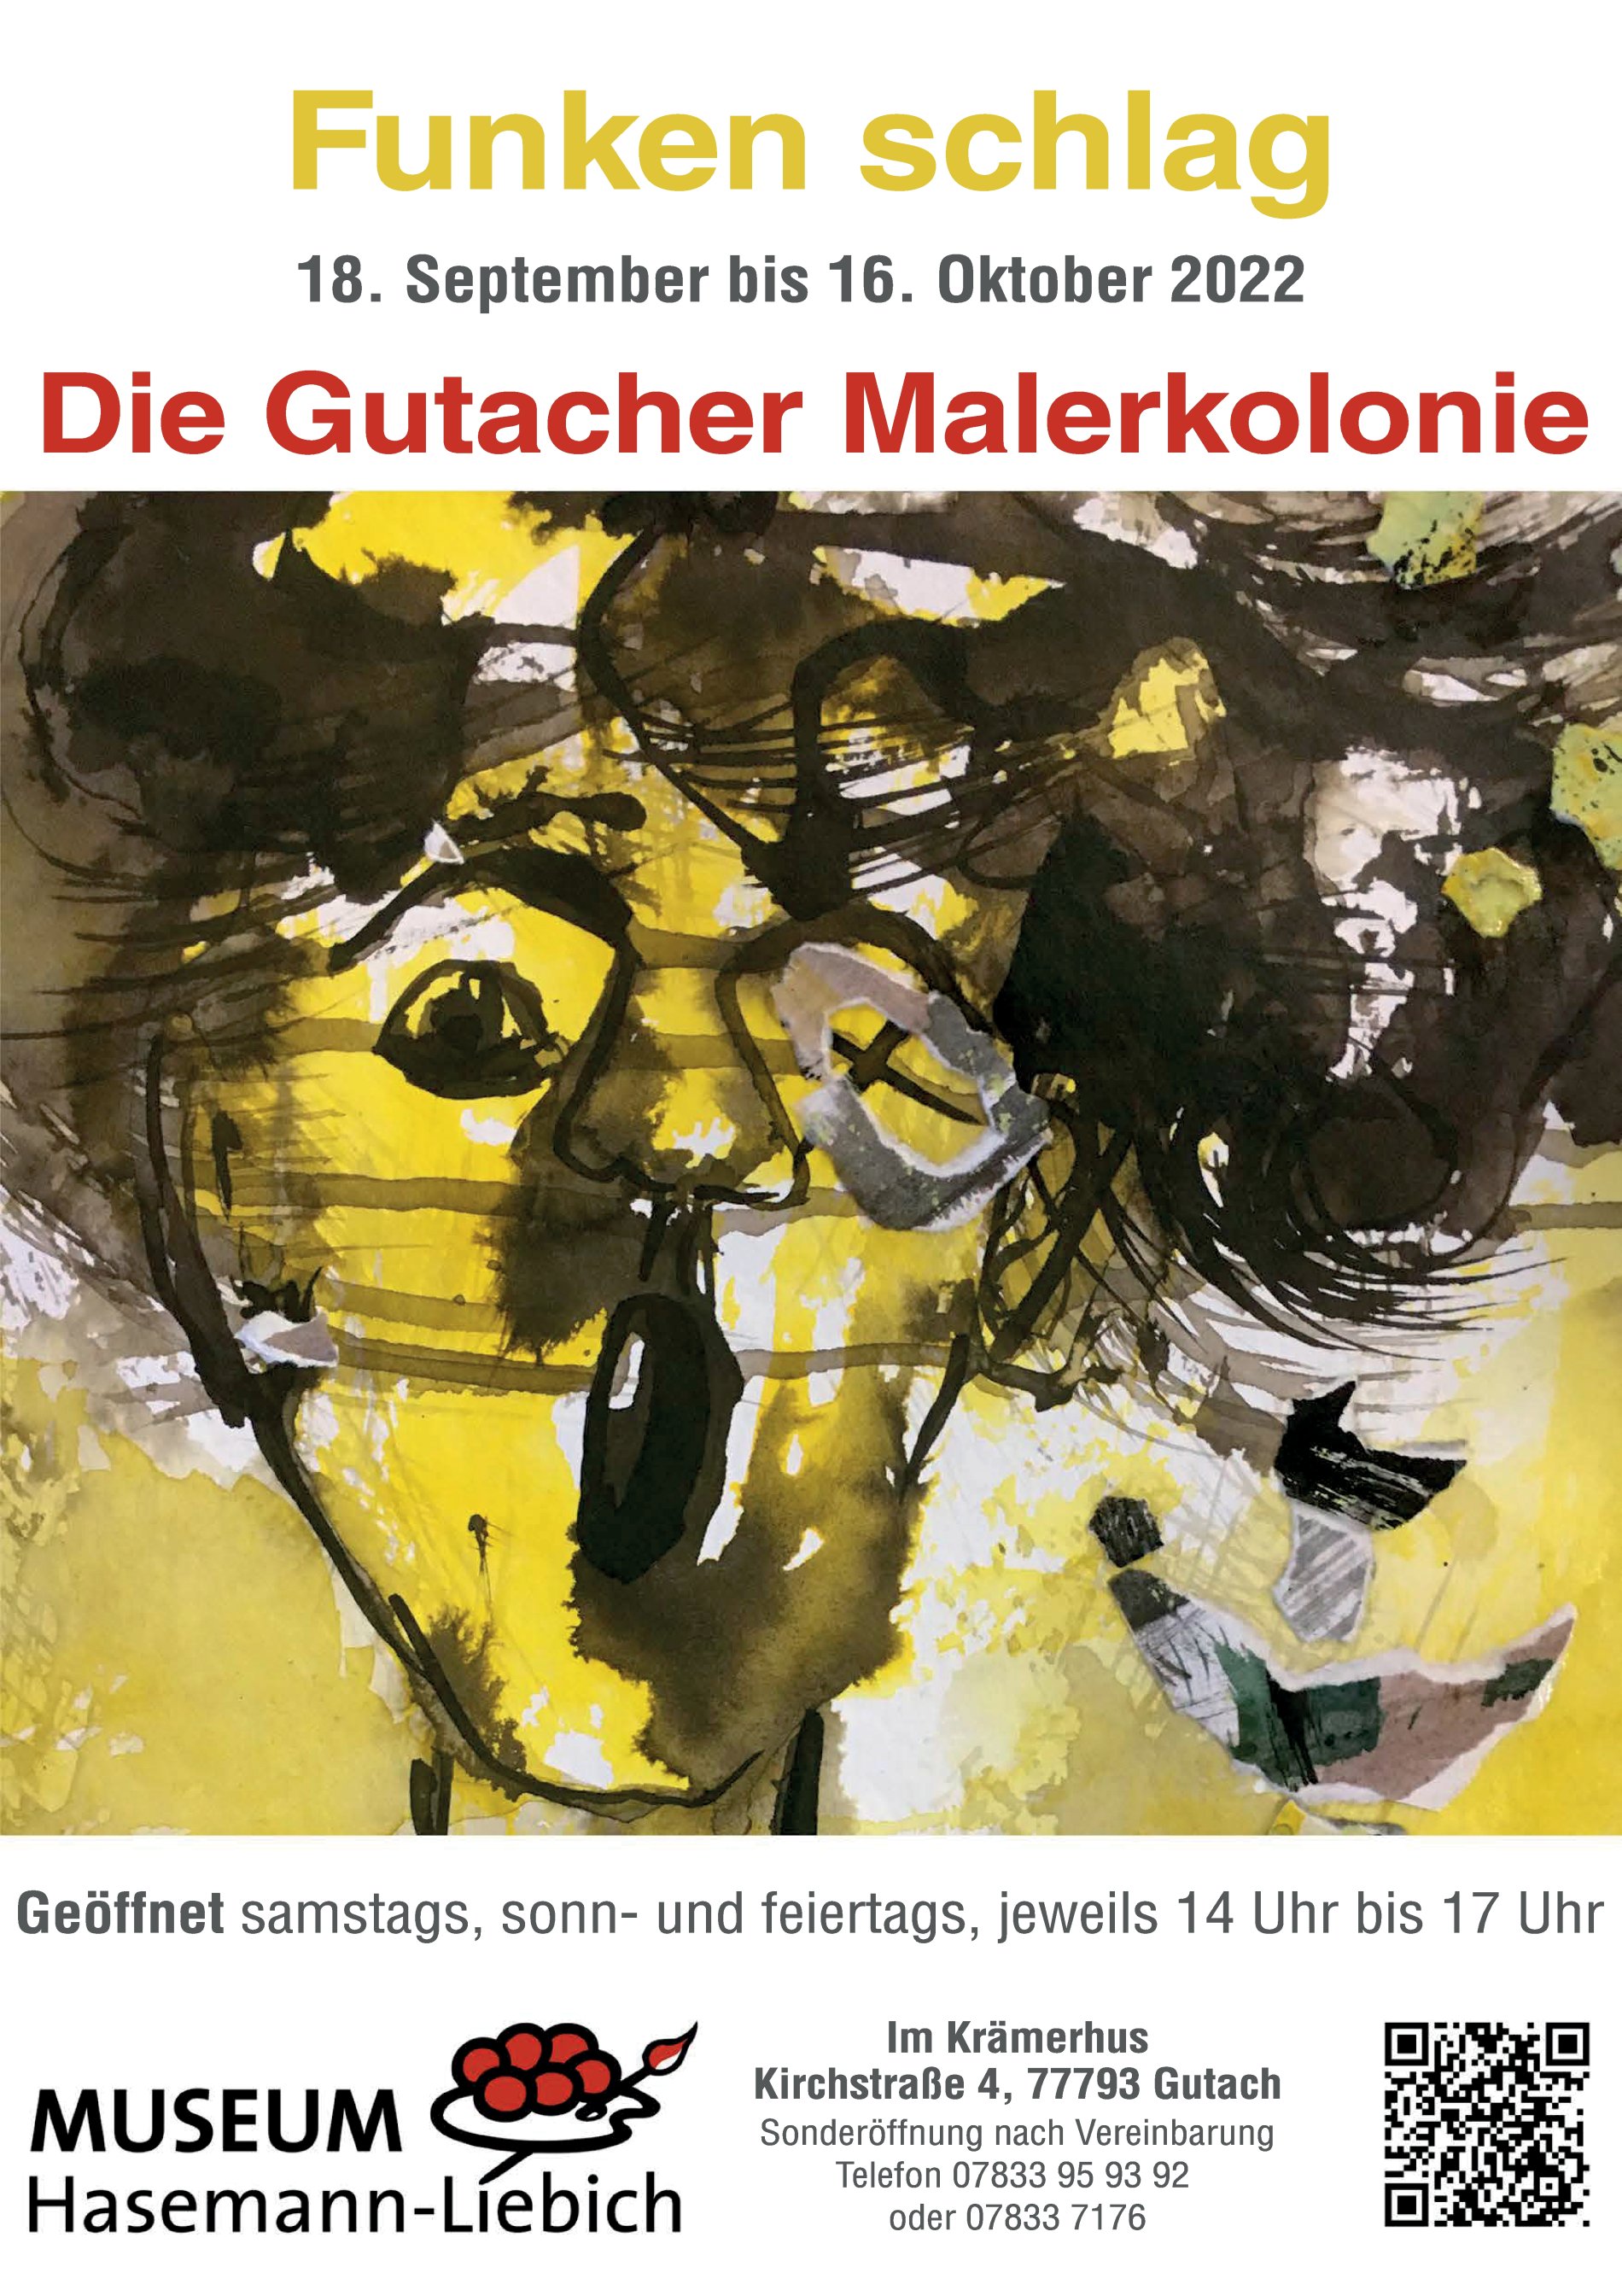 Plakat zur Ausstellung der Gutacher Malerkolonie / Urheber: Gutacher Malerkolonie